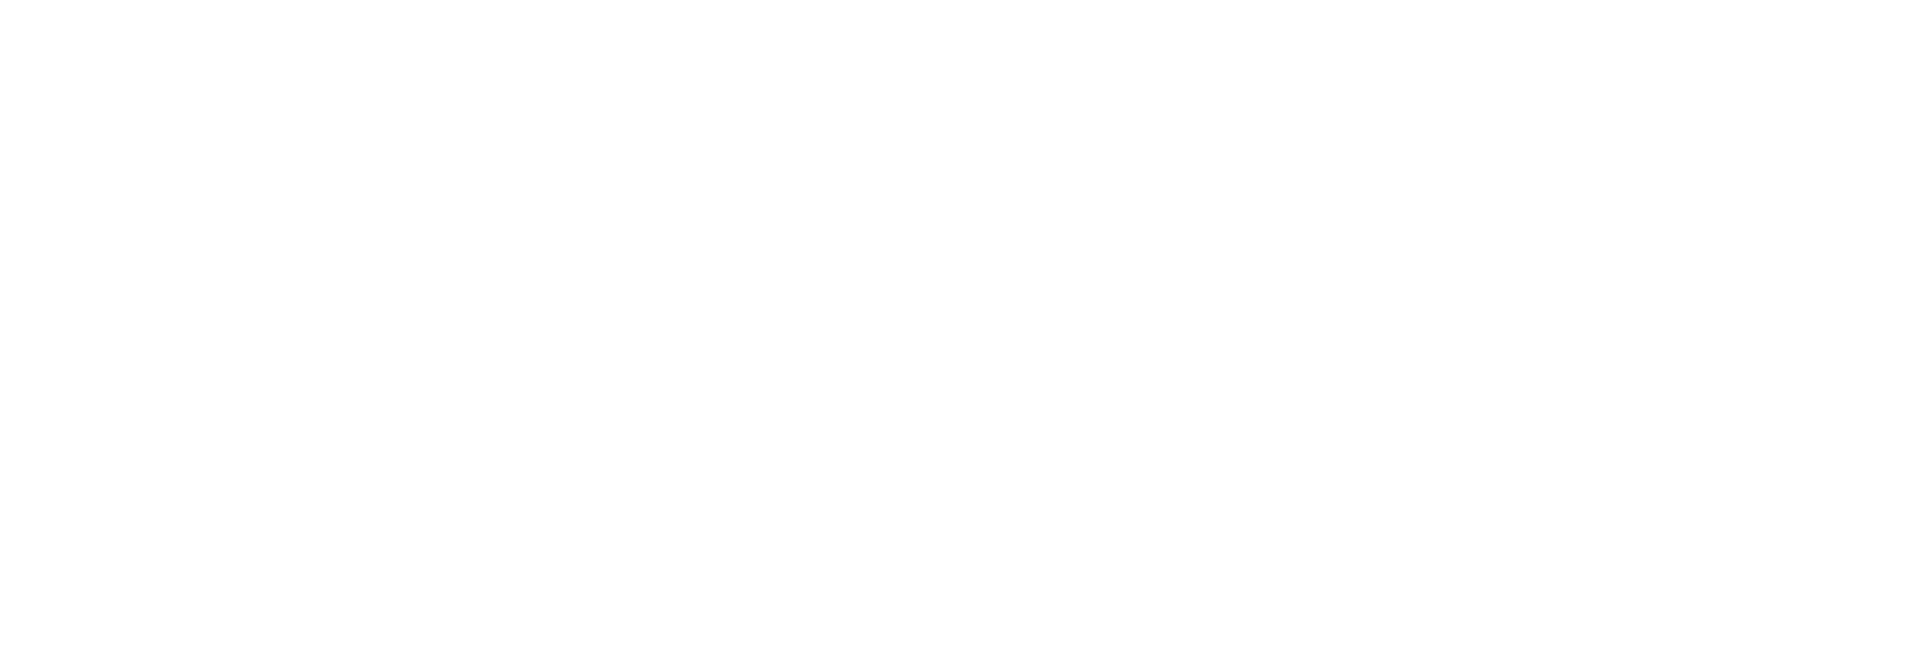 Achieve your goals graphic text